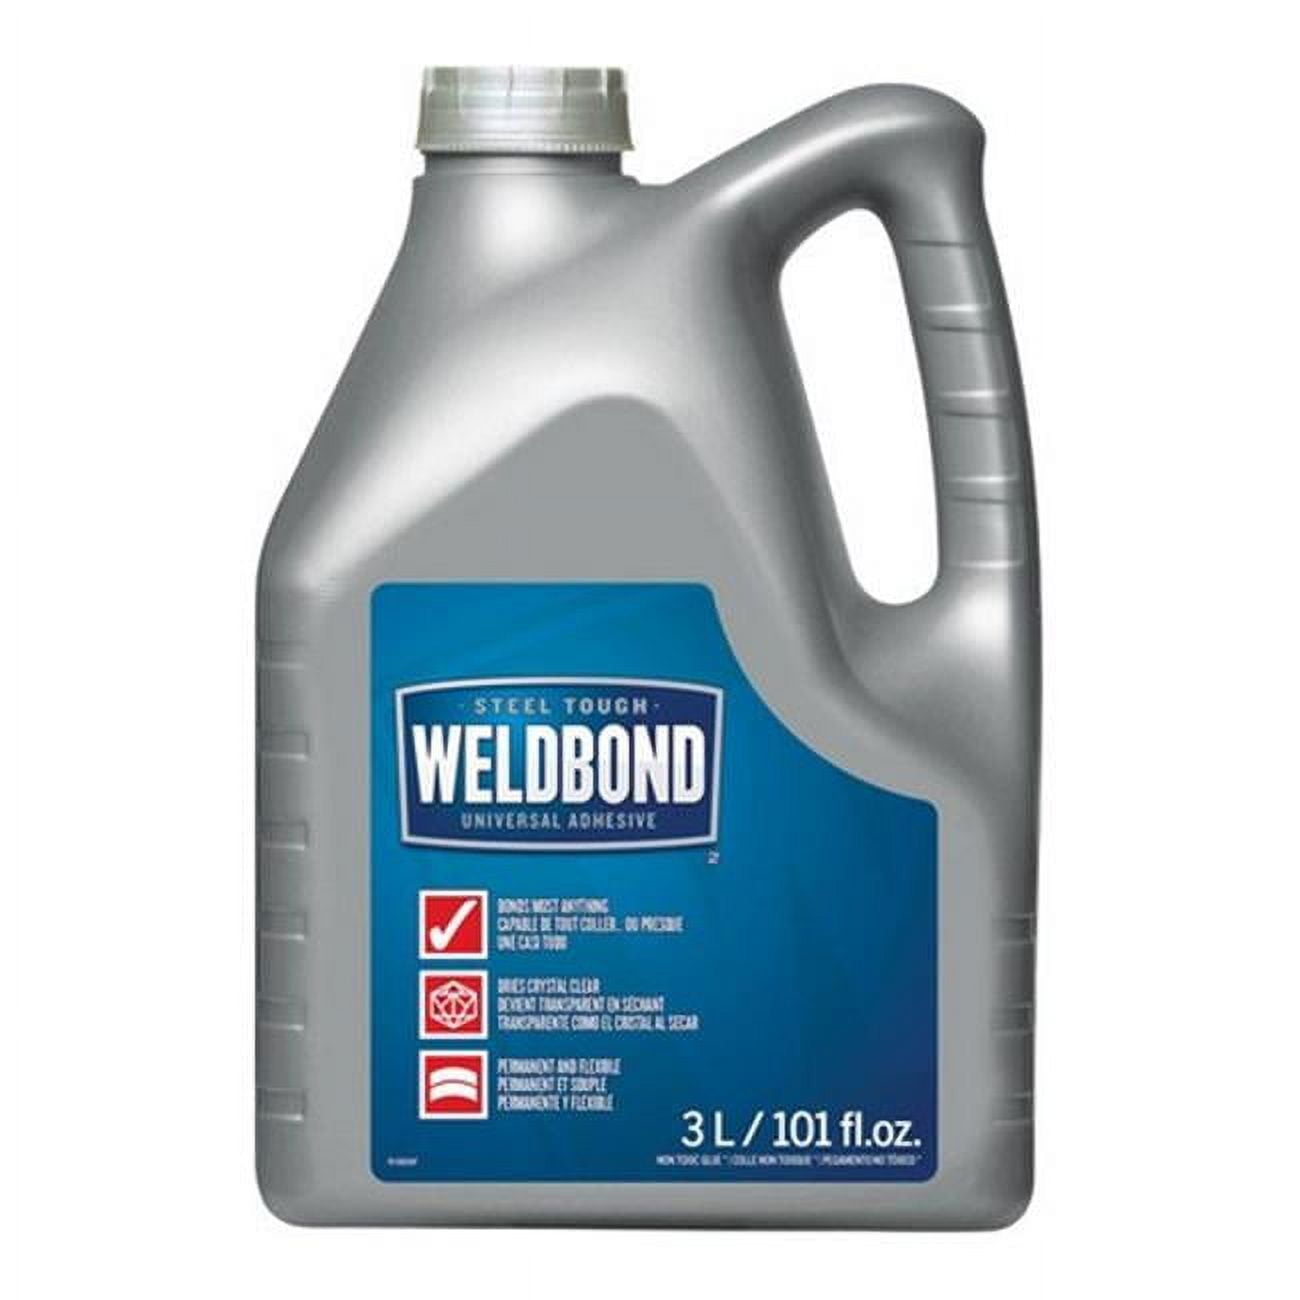 Weldbond Universal Adhesive (2 oz)